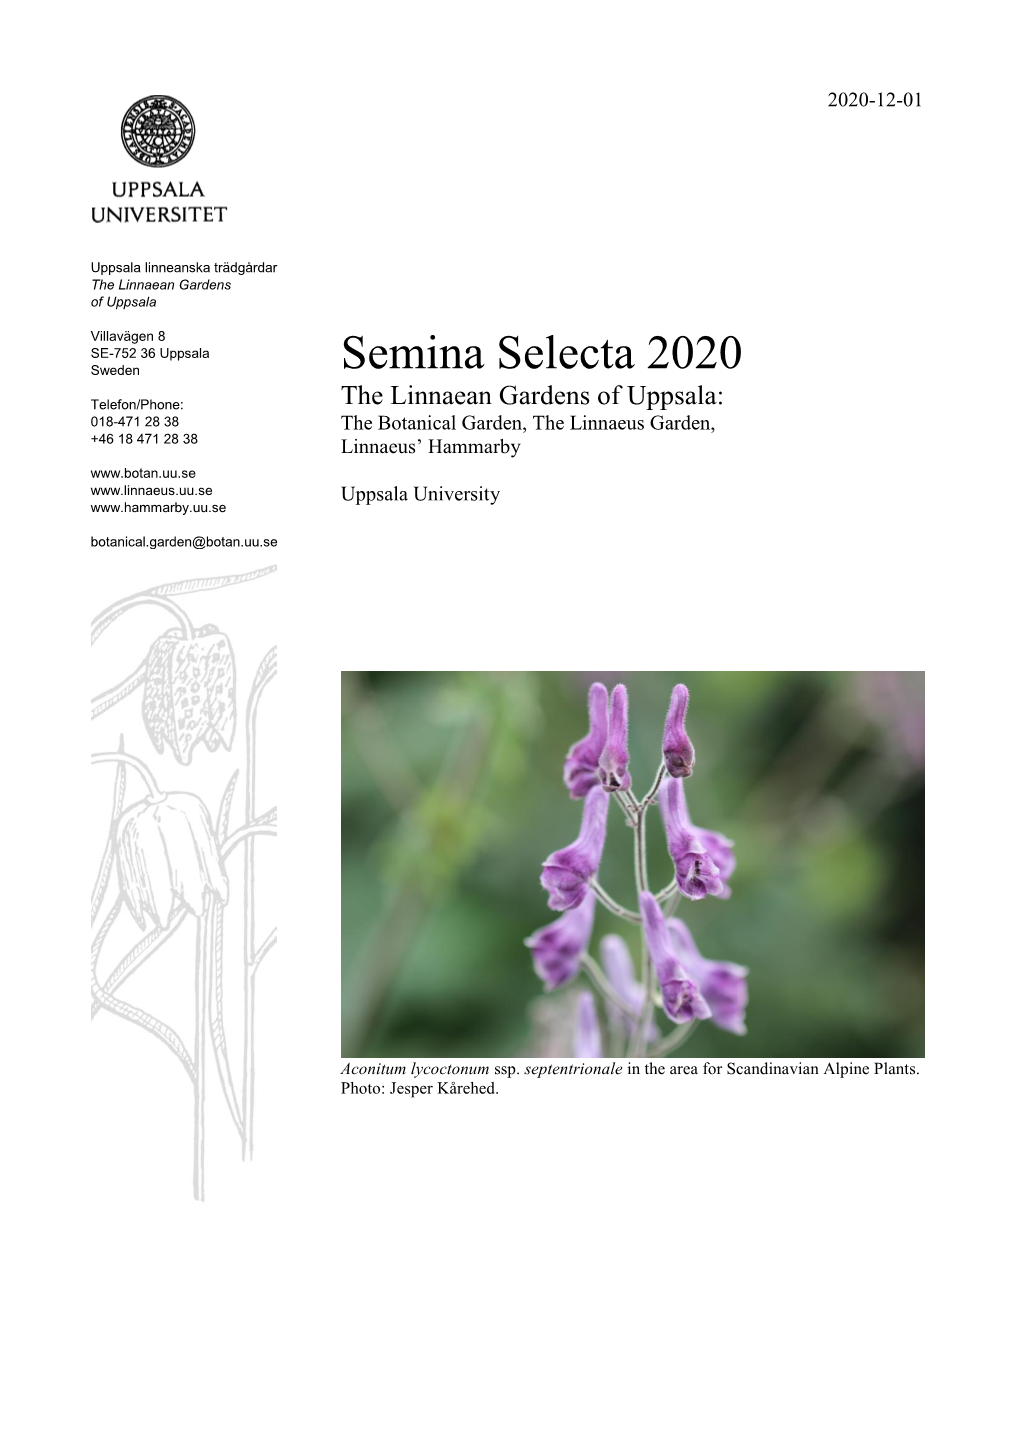 Semina Selecta 2020 – the Linnaean Gardens of Uppsala